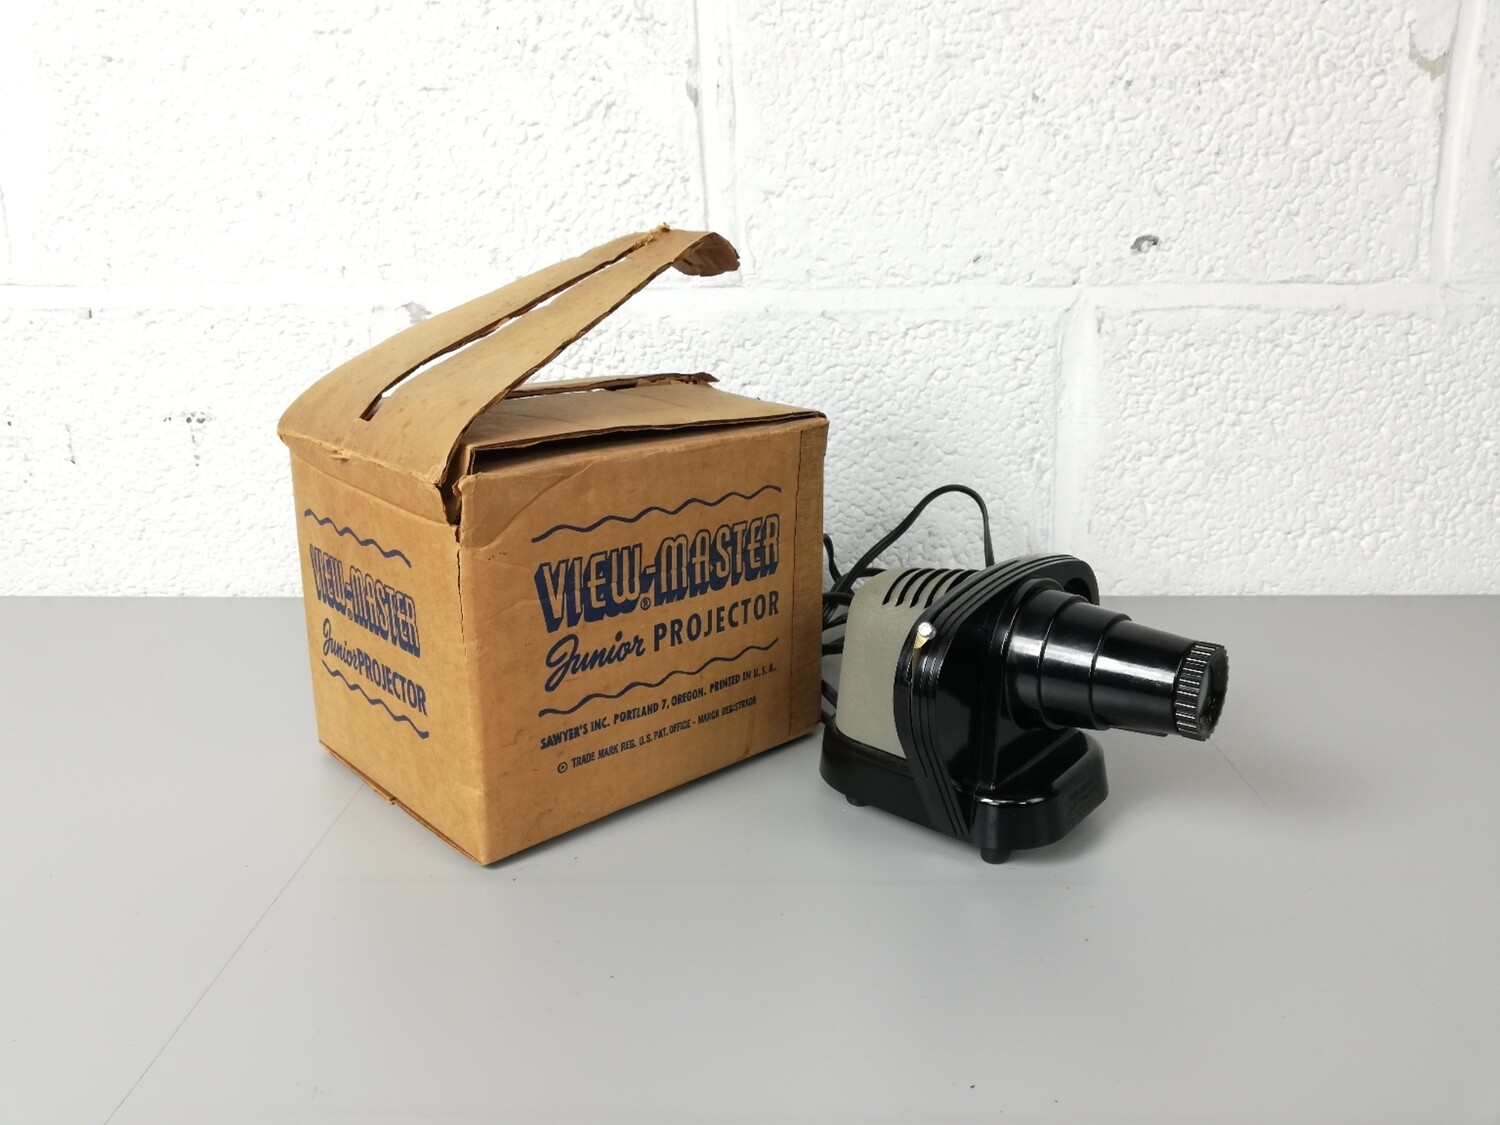 View-master Junior projector in originele doos